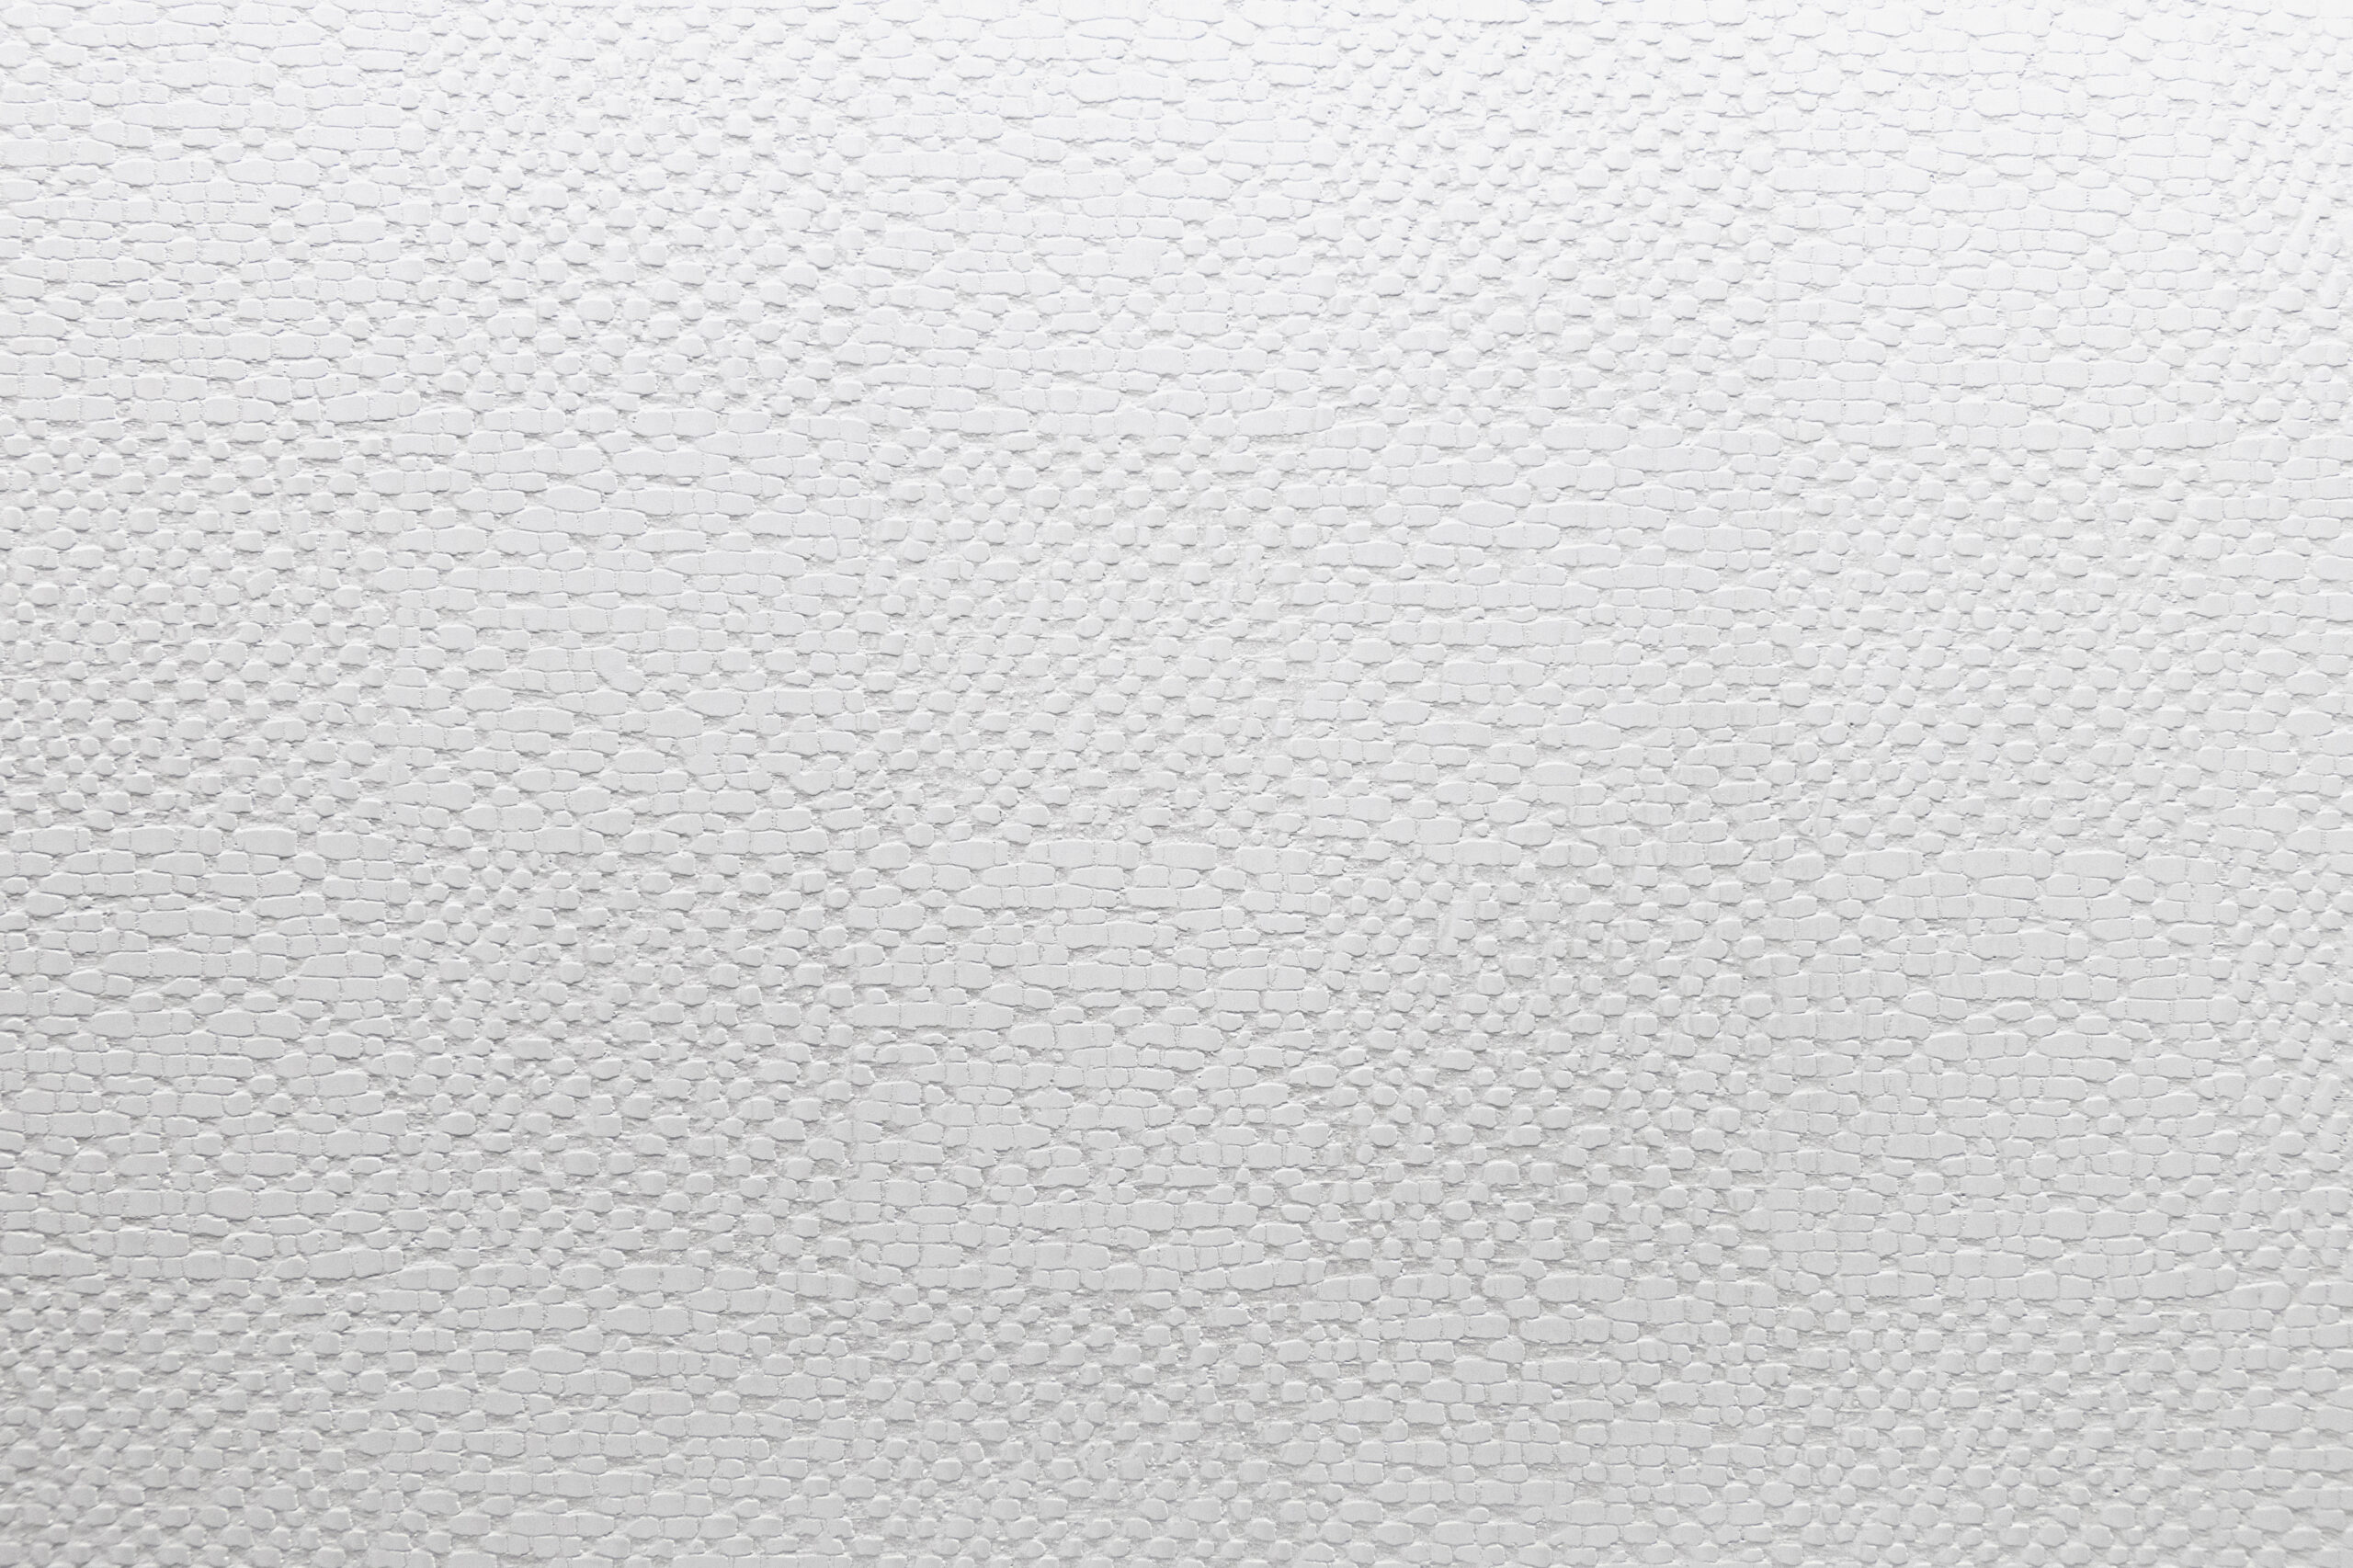 Alèze maille polyester enduite polyuréthane M1 blanc 150gr forme